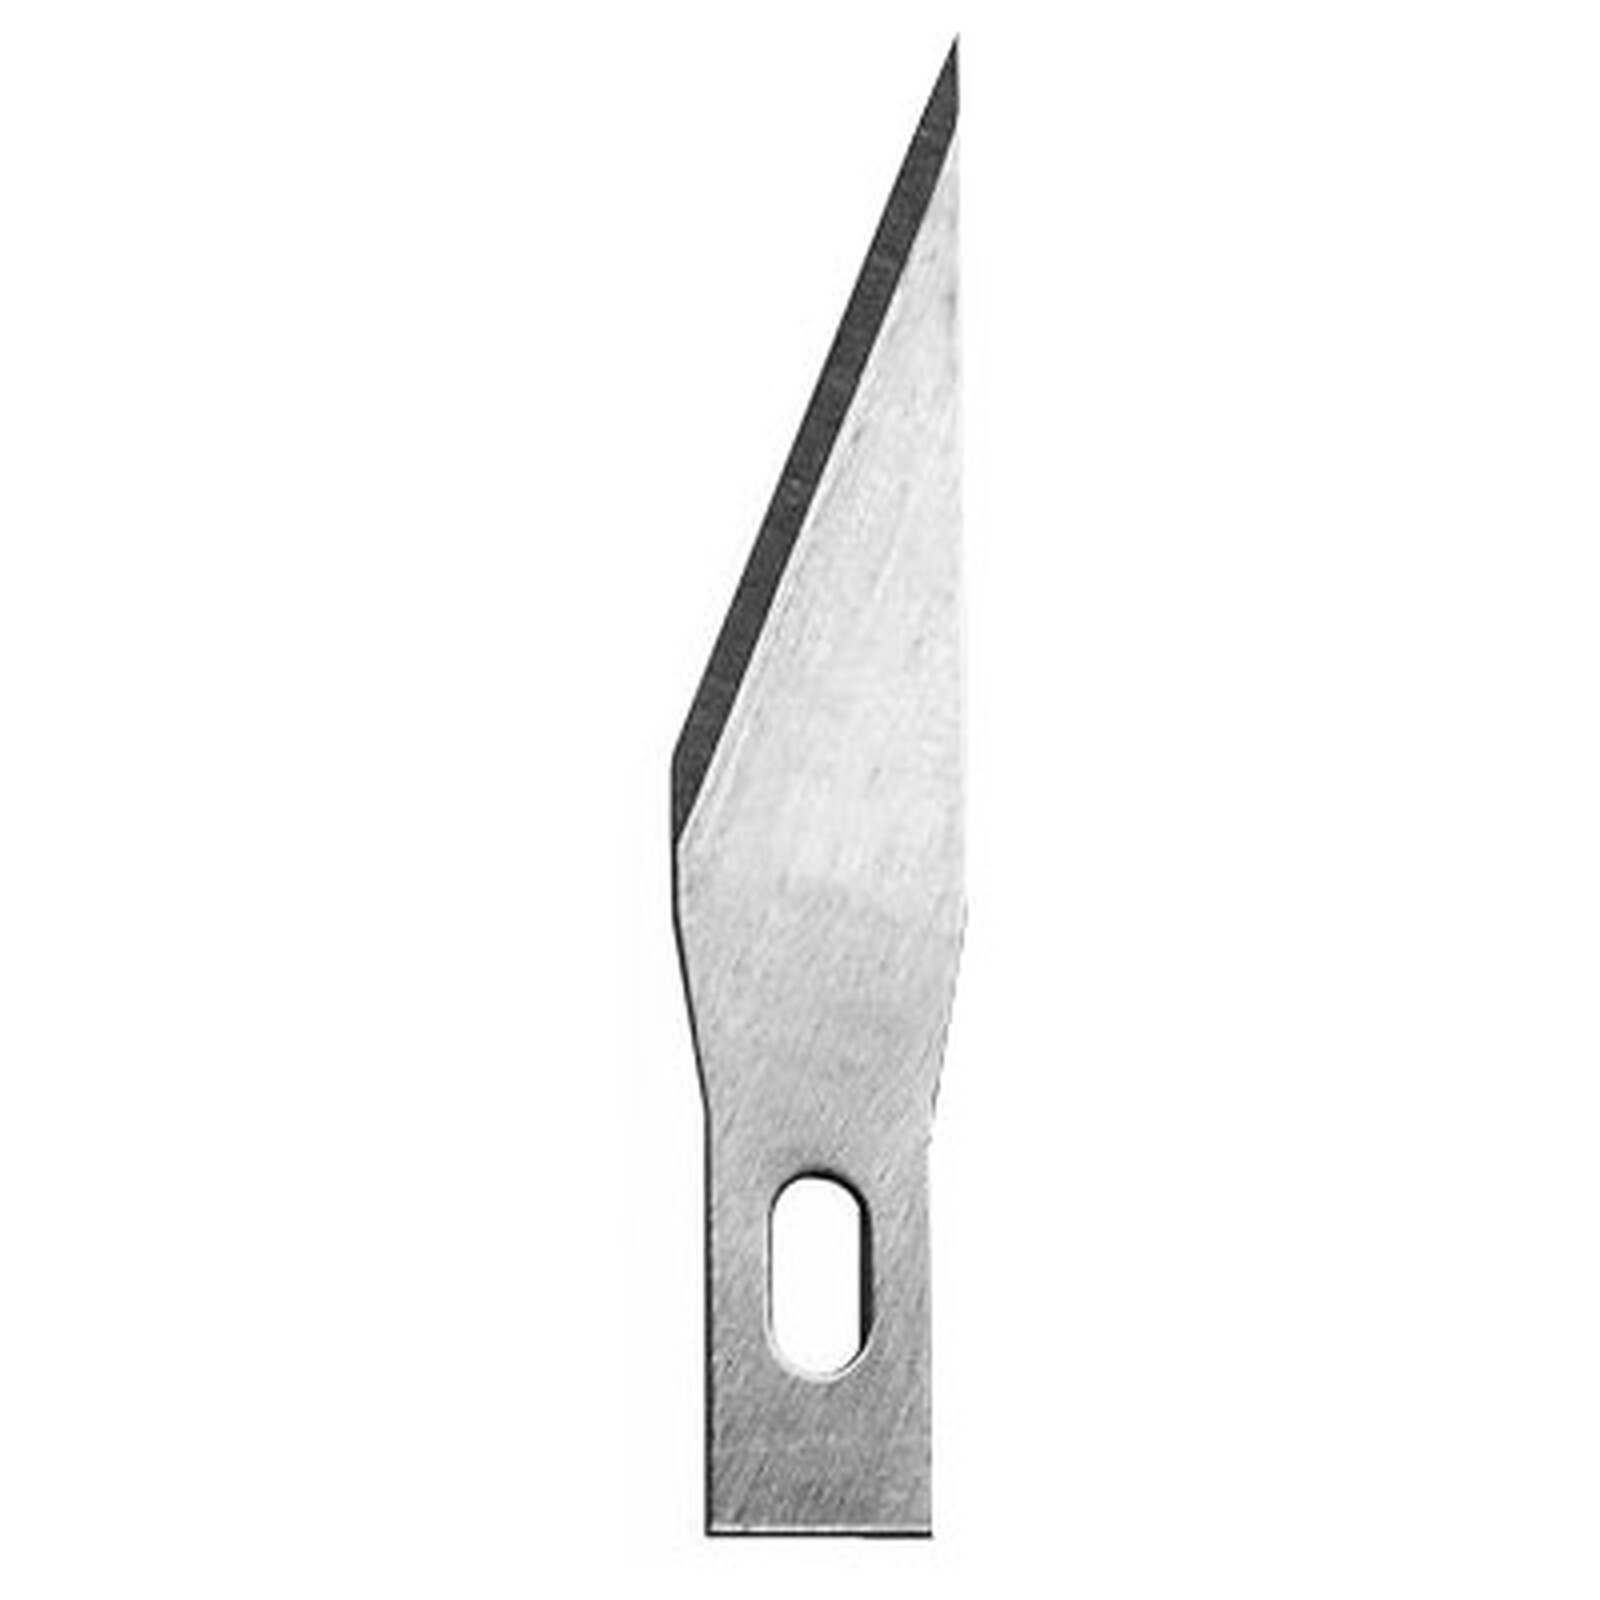 Extra fine cutter blades - Scissors & cutting - LDLC 3-year